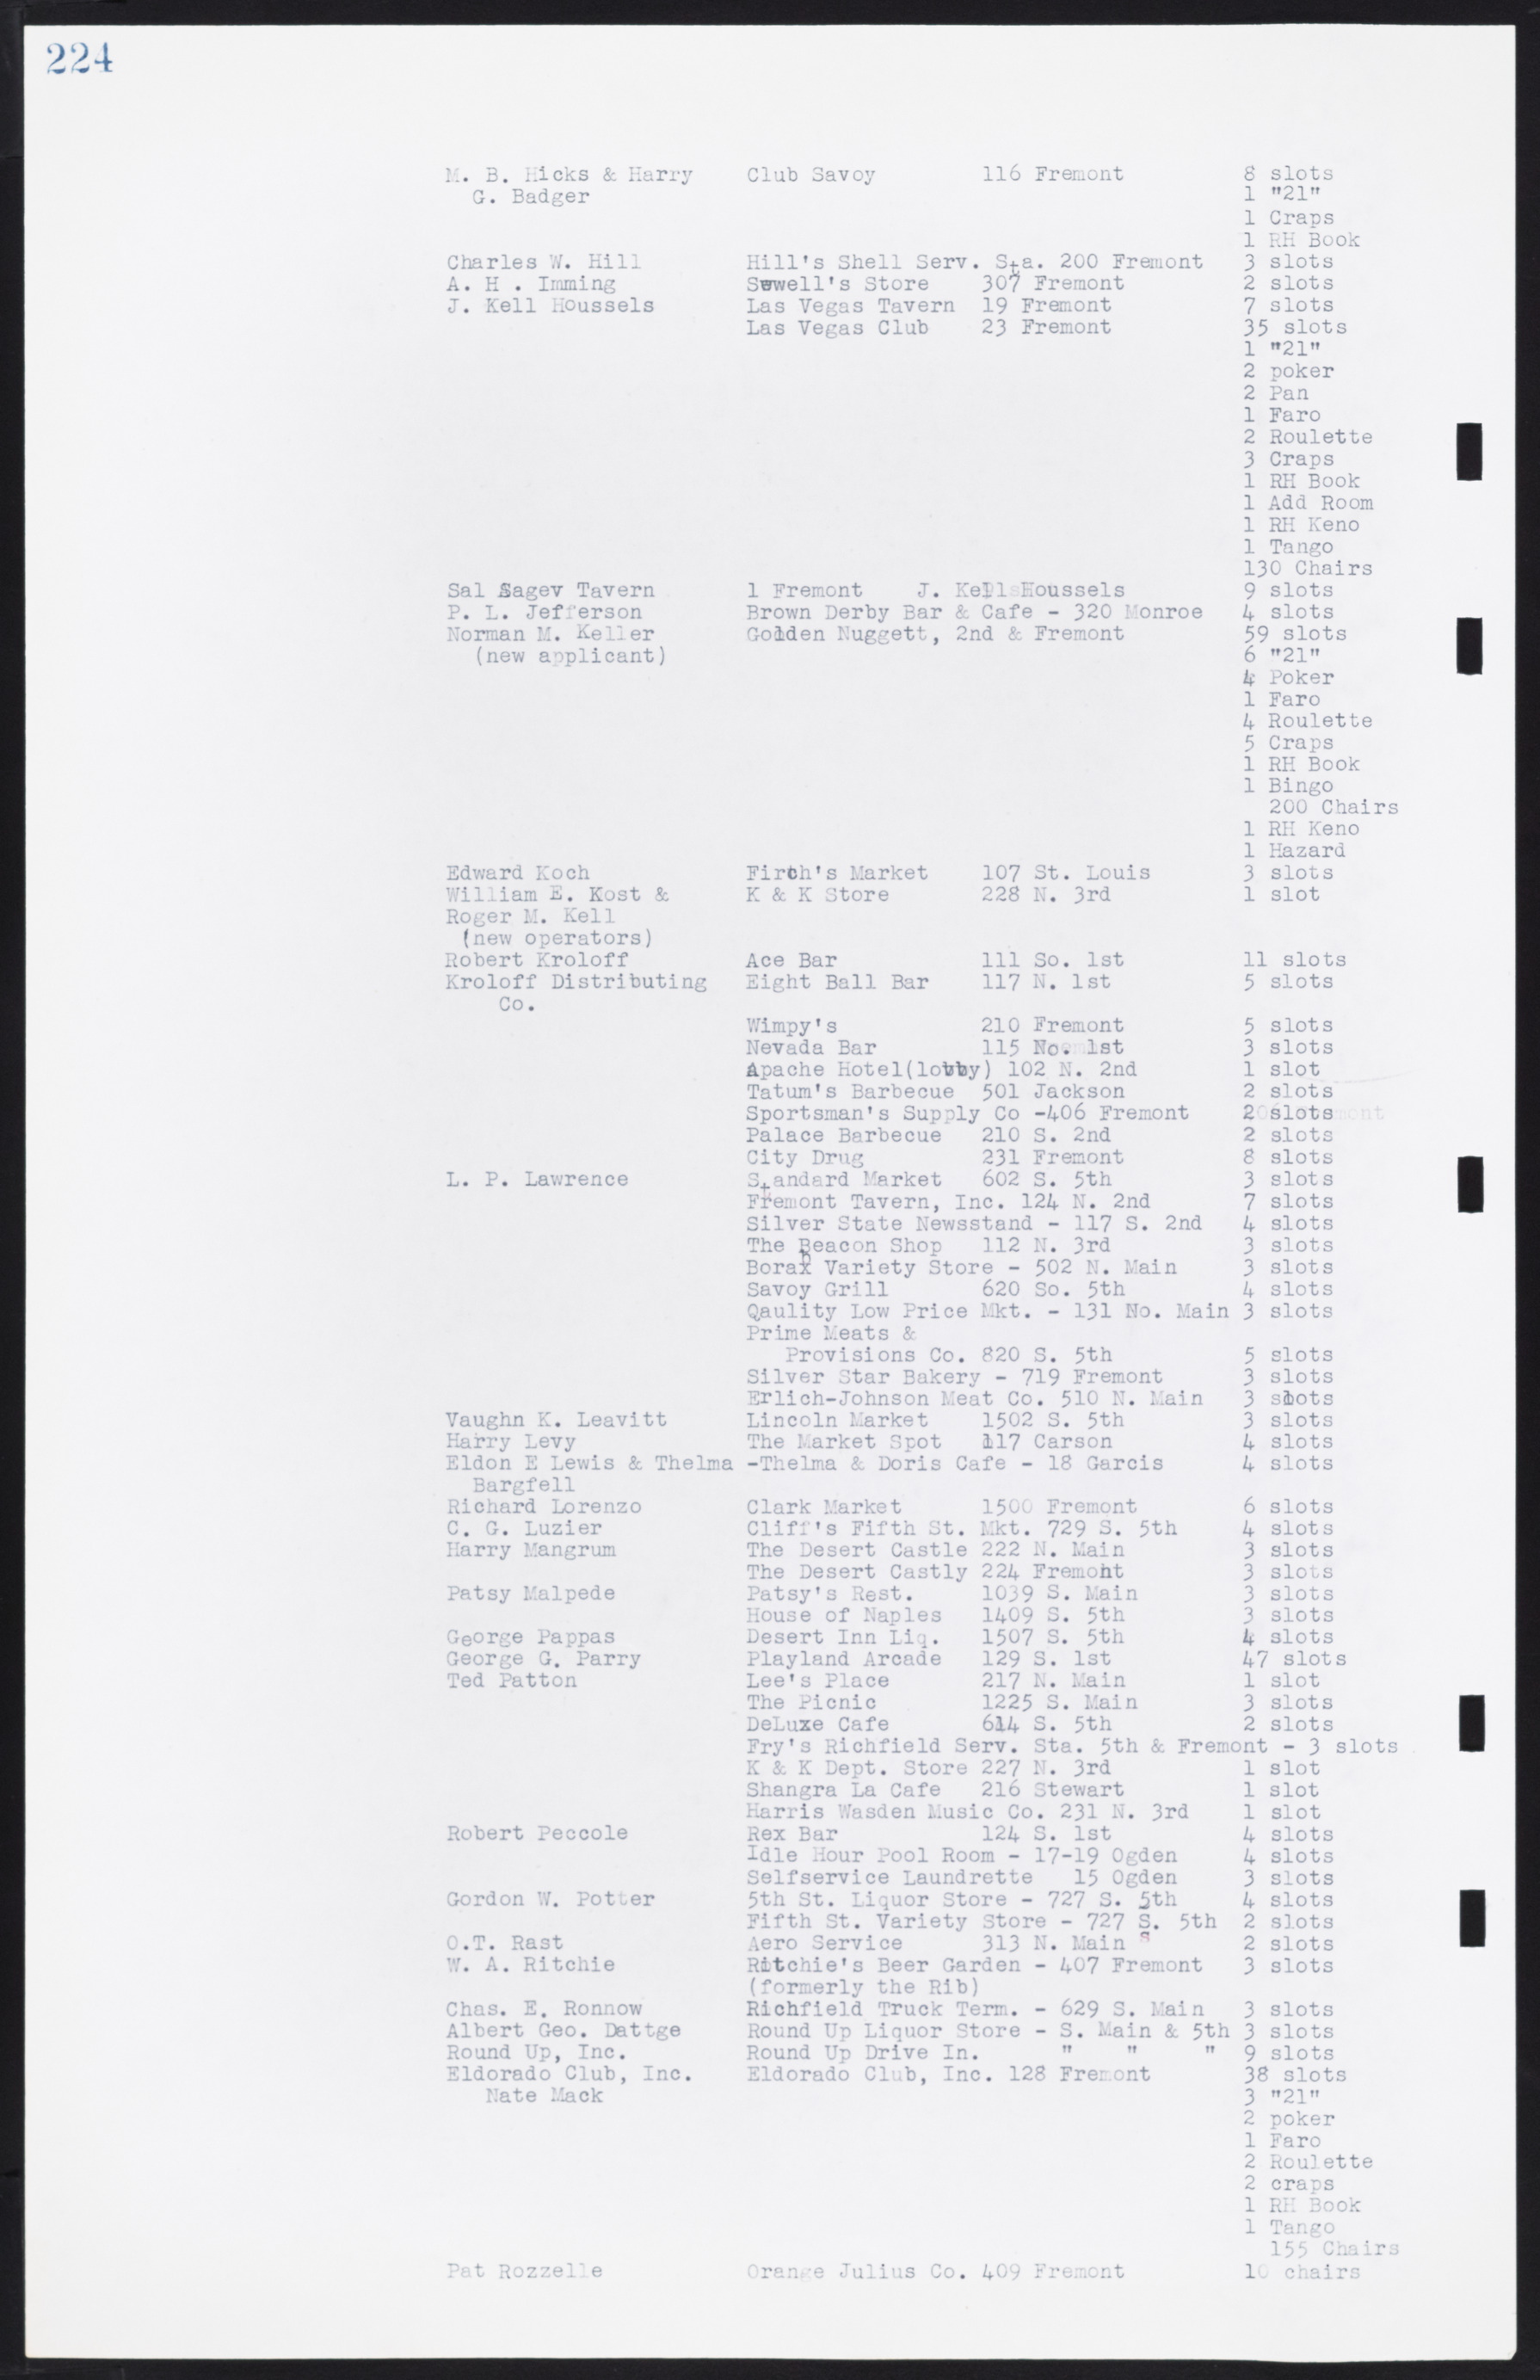 Las Vegas City Commission Minutes, January 7, 1947 to October 26, 1949, lvc000006-246